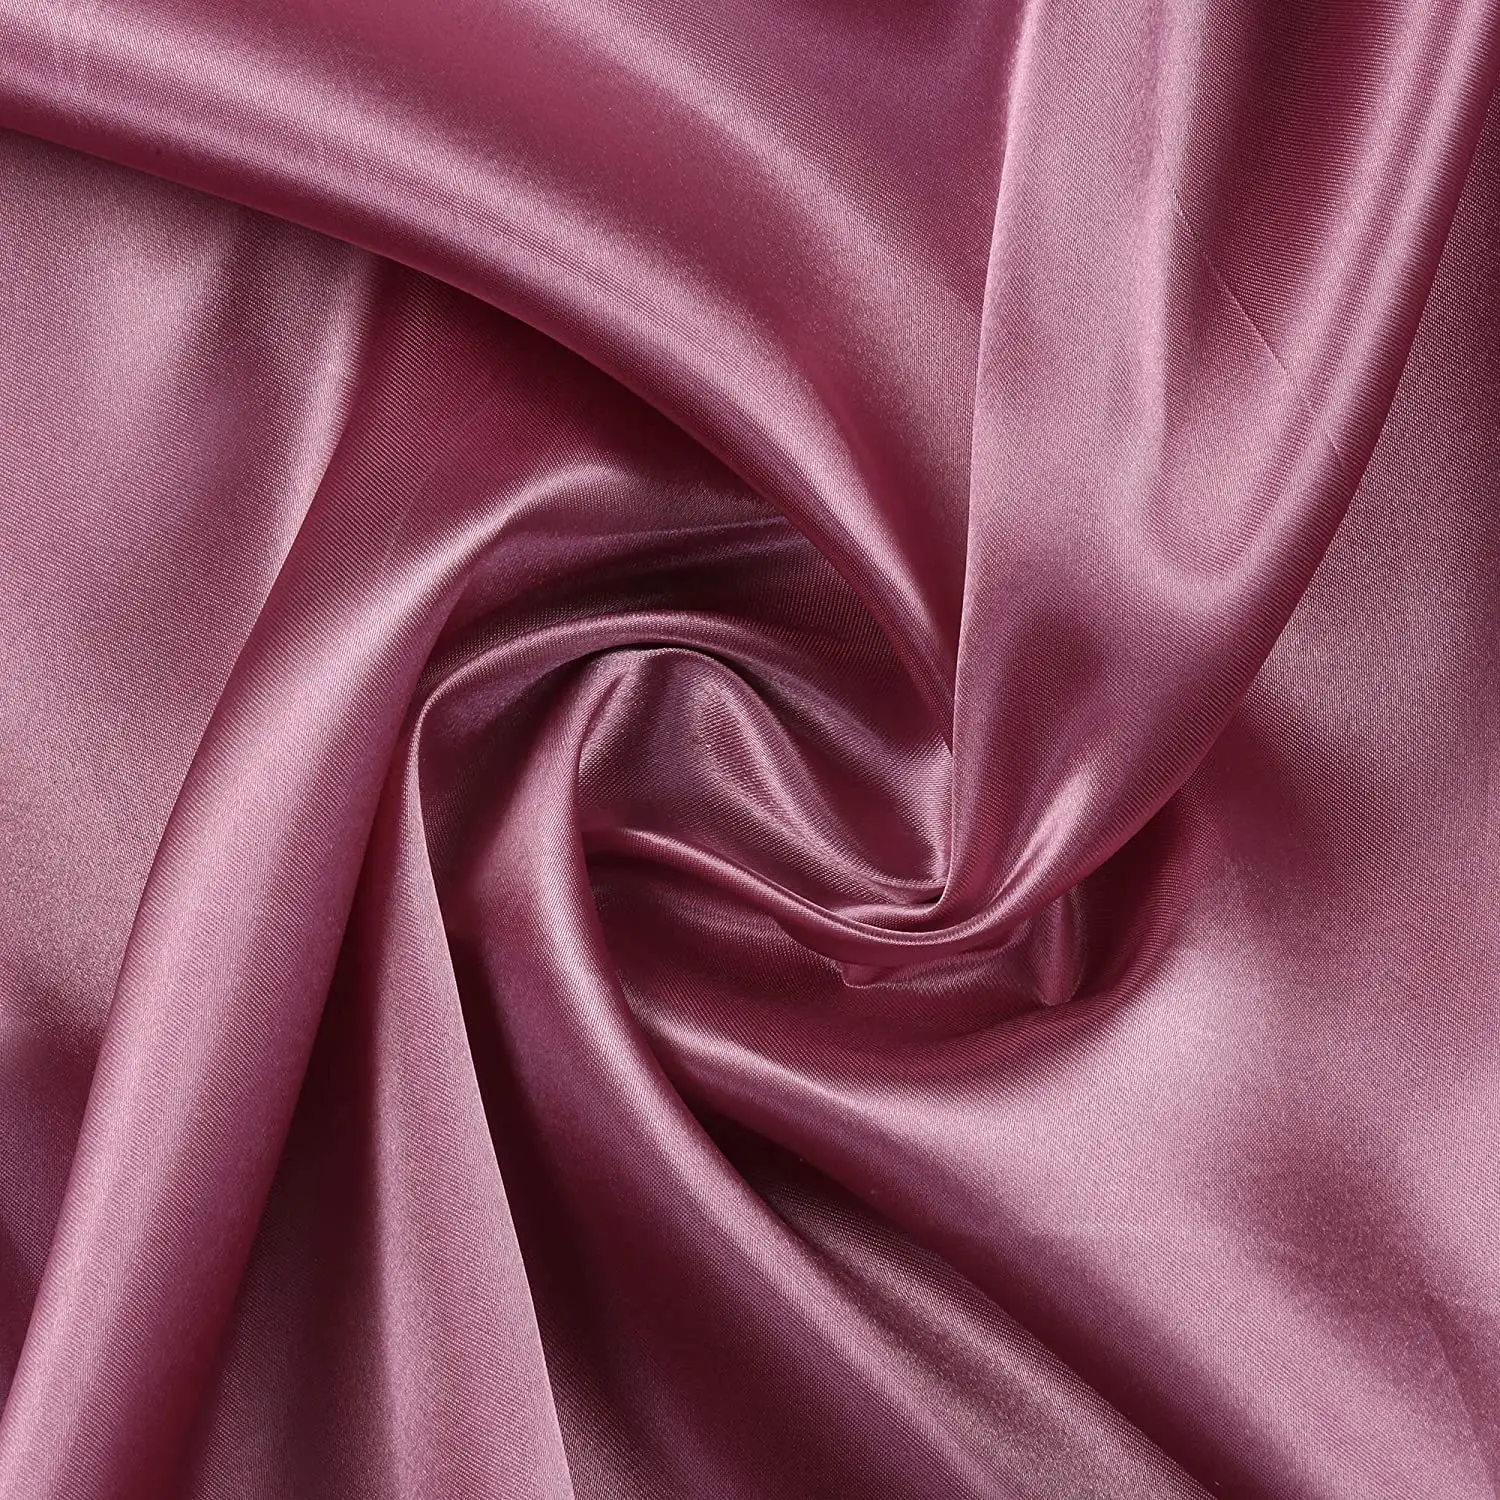 100 polyester charmeuse sand wash satin silk fabric many colors satin fabric for wedding dress